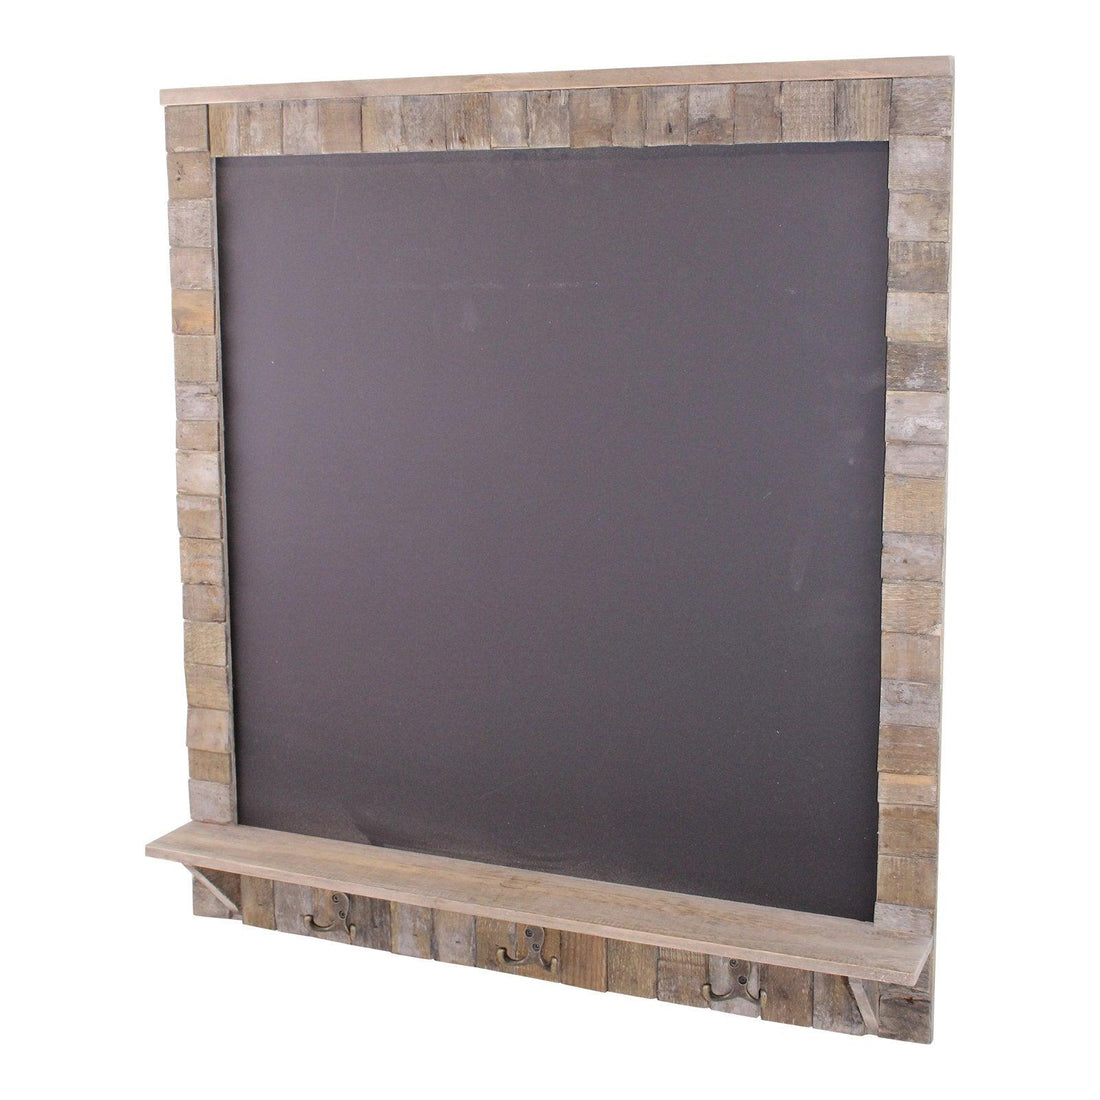 Large Blackboard with Driftwod Effect Surround, Shelf and 3 Double Hooks - £62.99 - Blackboards, Memo Boards & Calendars 